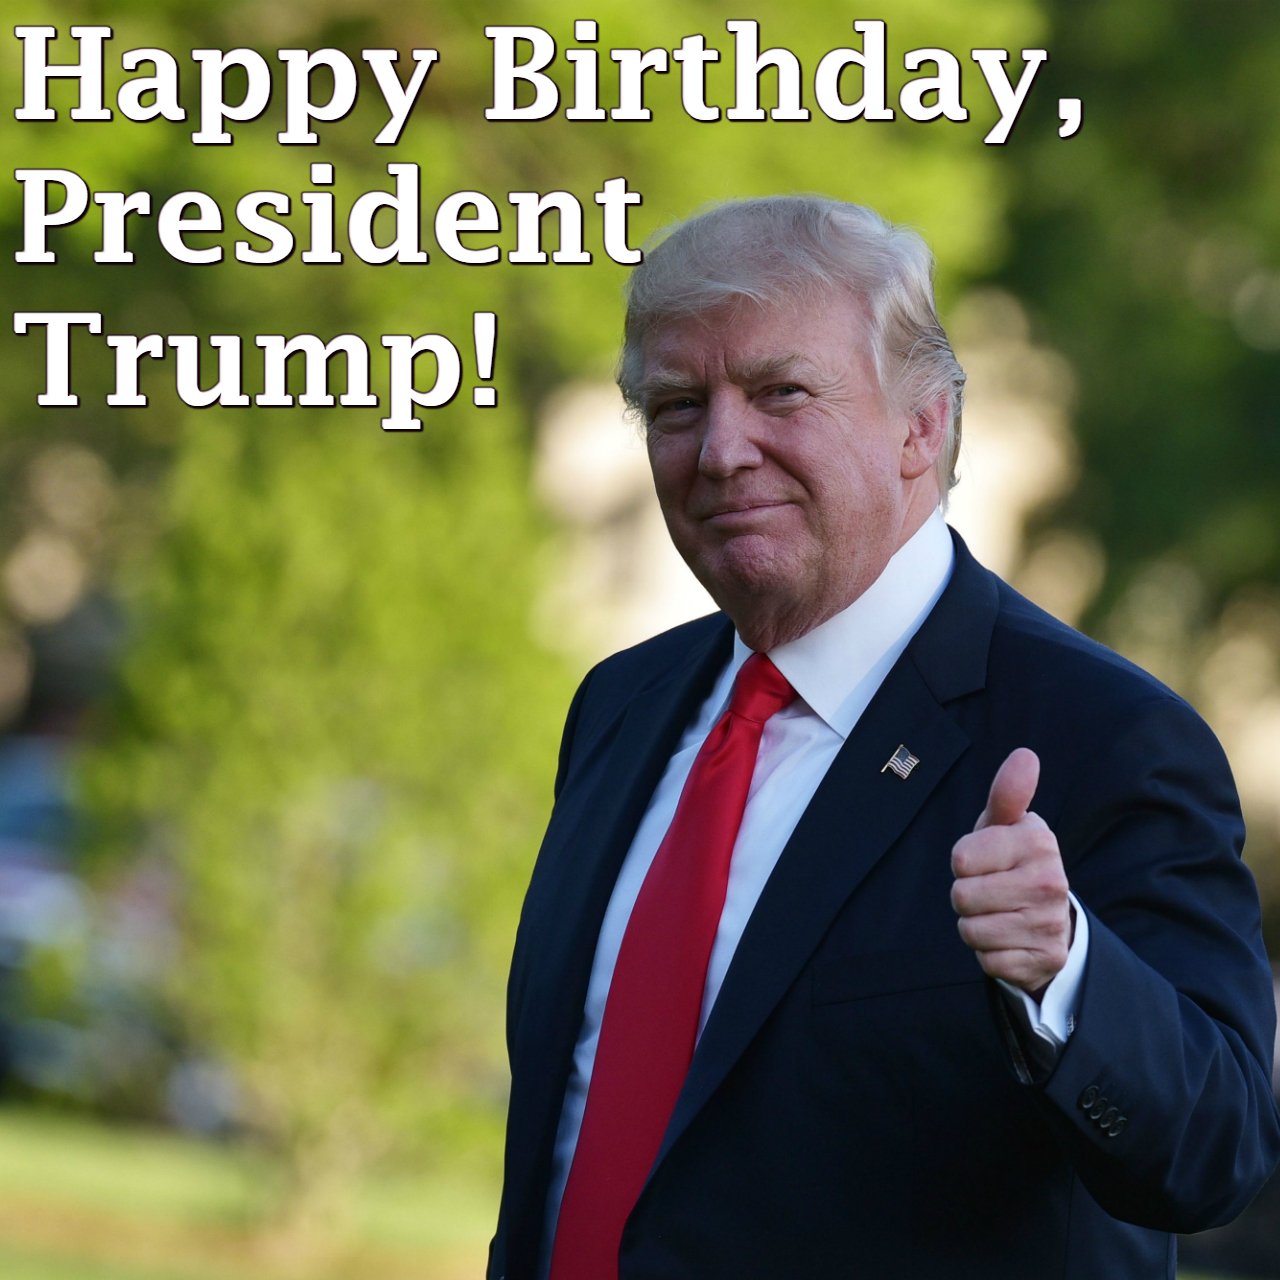 Wishing a very happy 72nd birthday to President Donald Trump! 